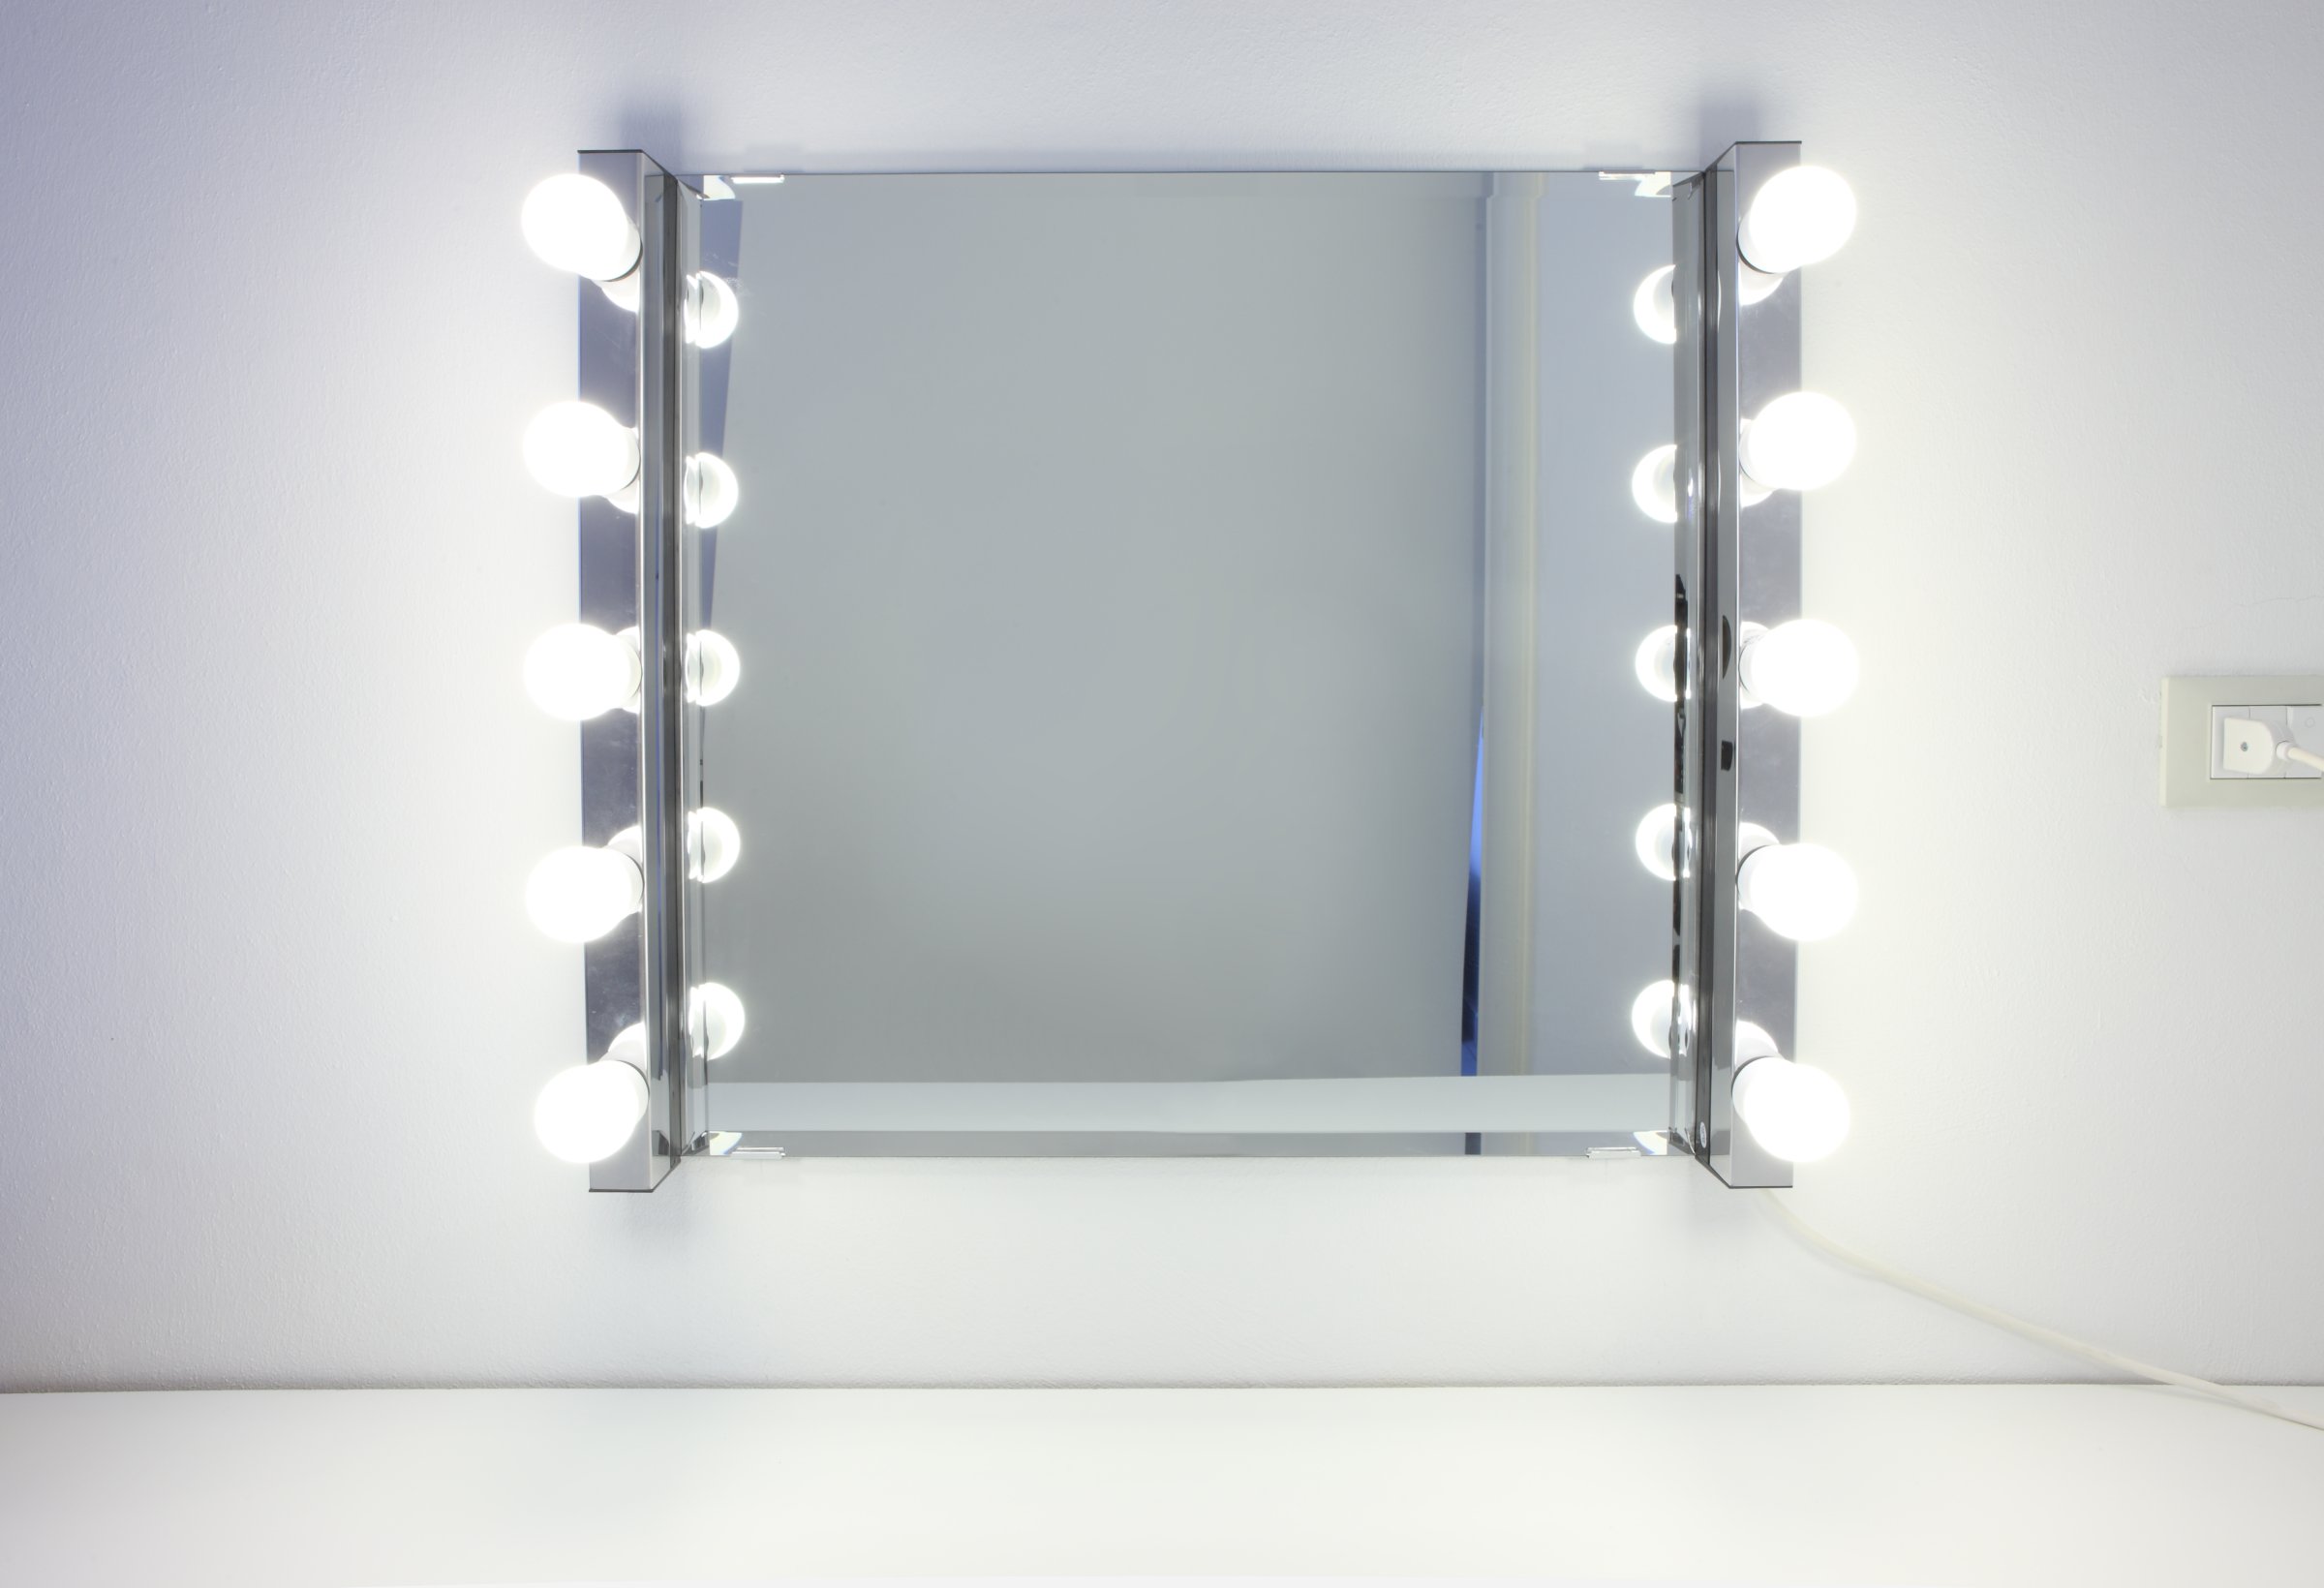 Dressing room mirror with ten light bulbs